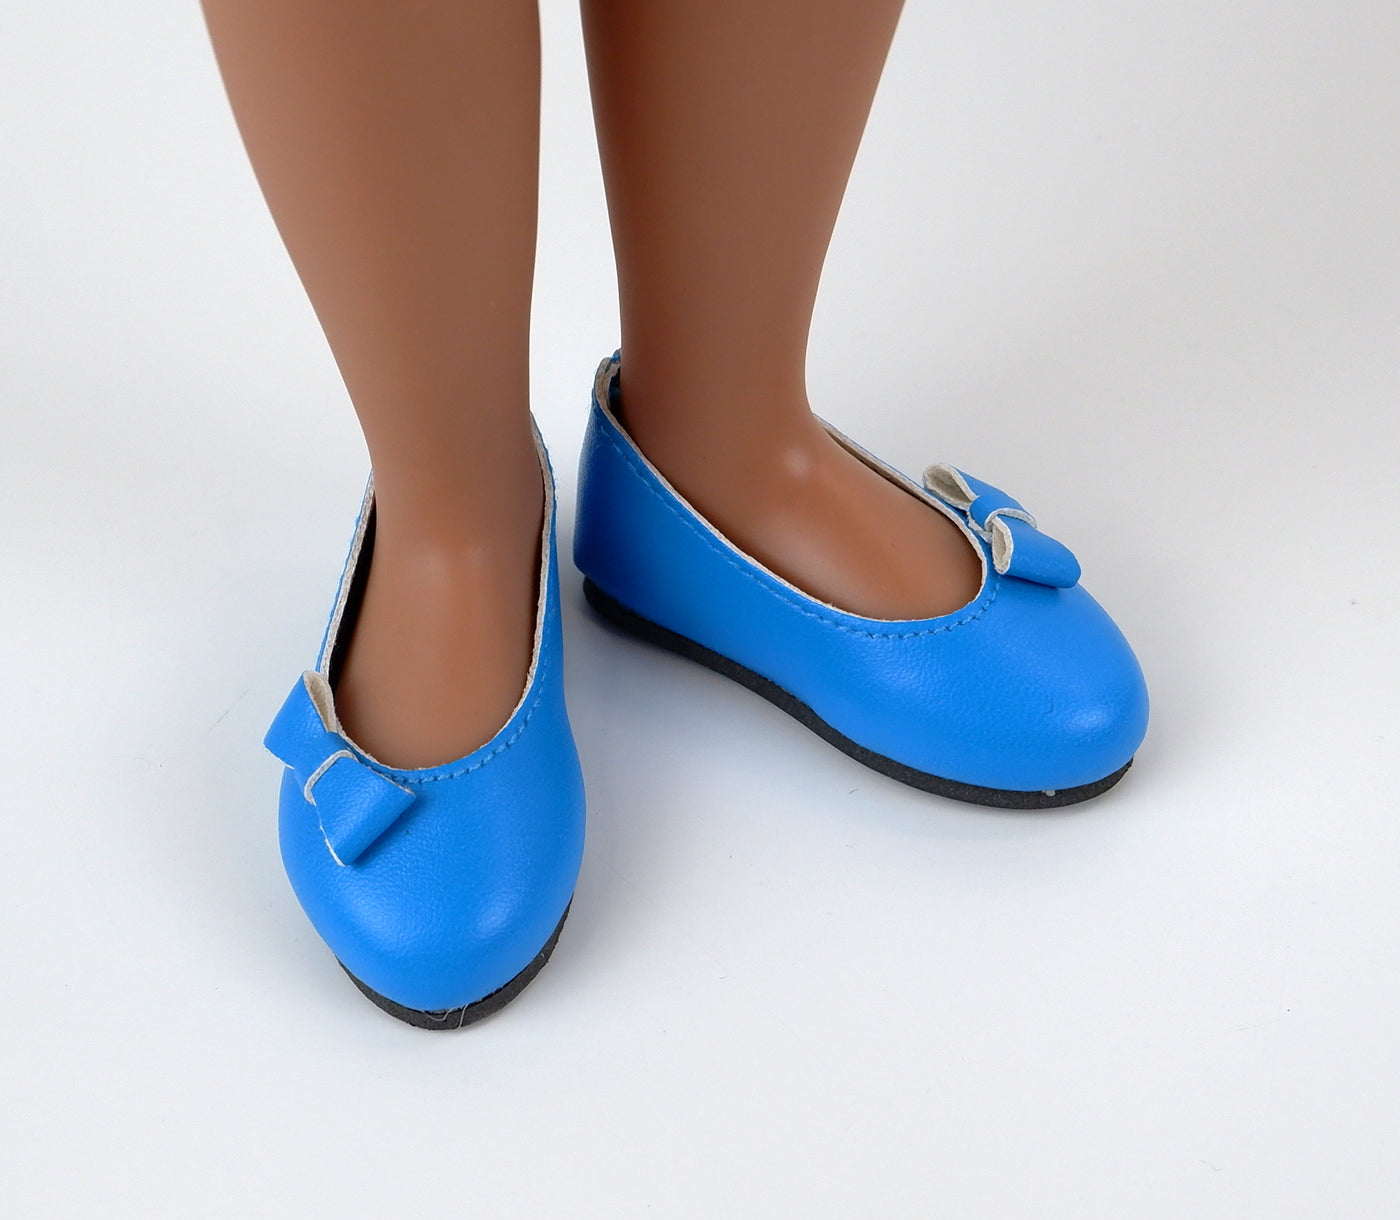 Bow Toe Ballet Flats - Bright Blue